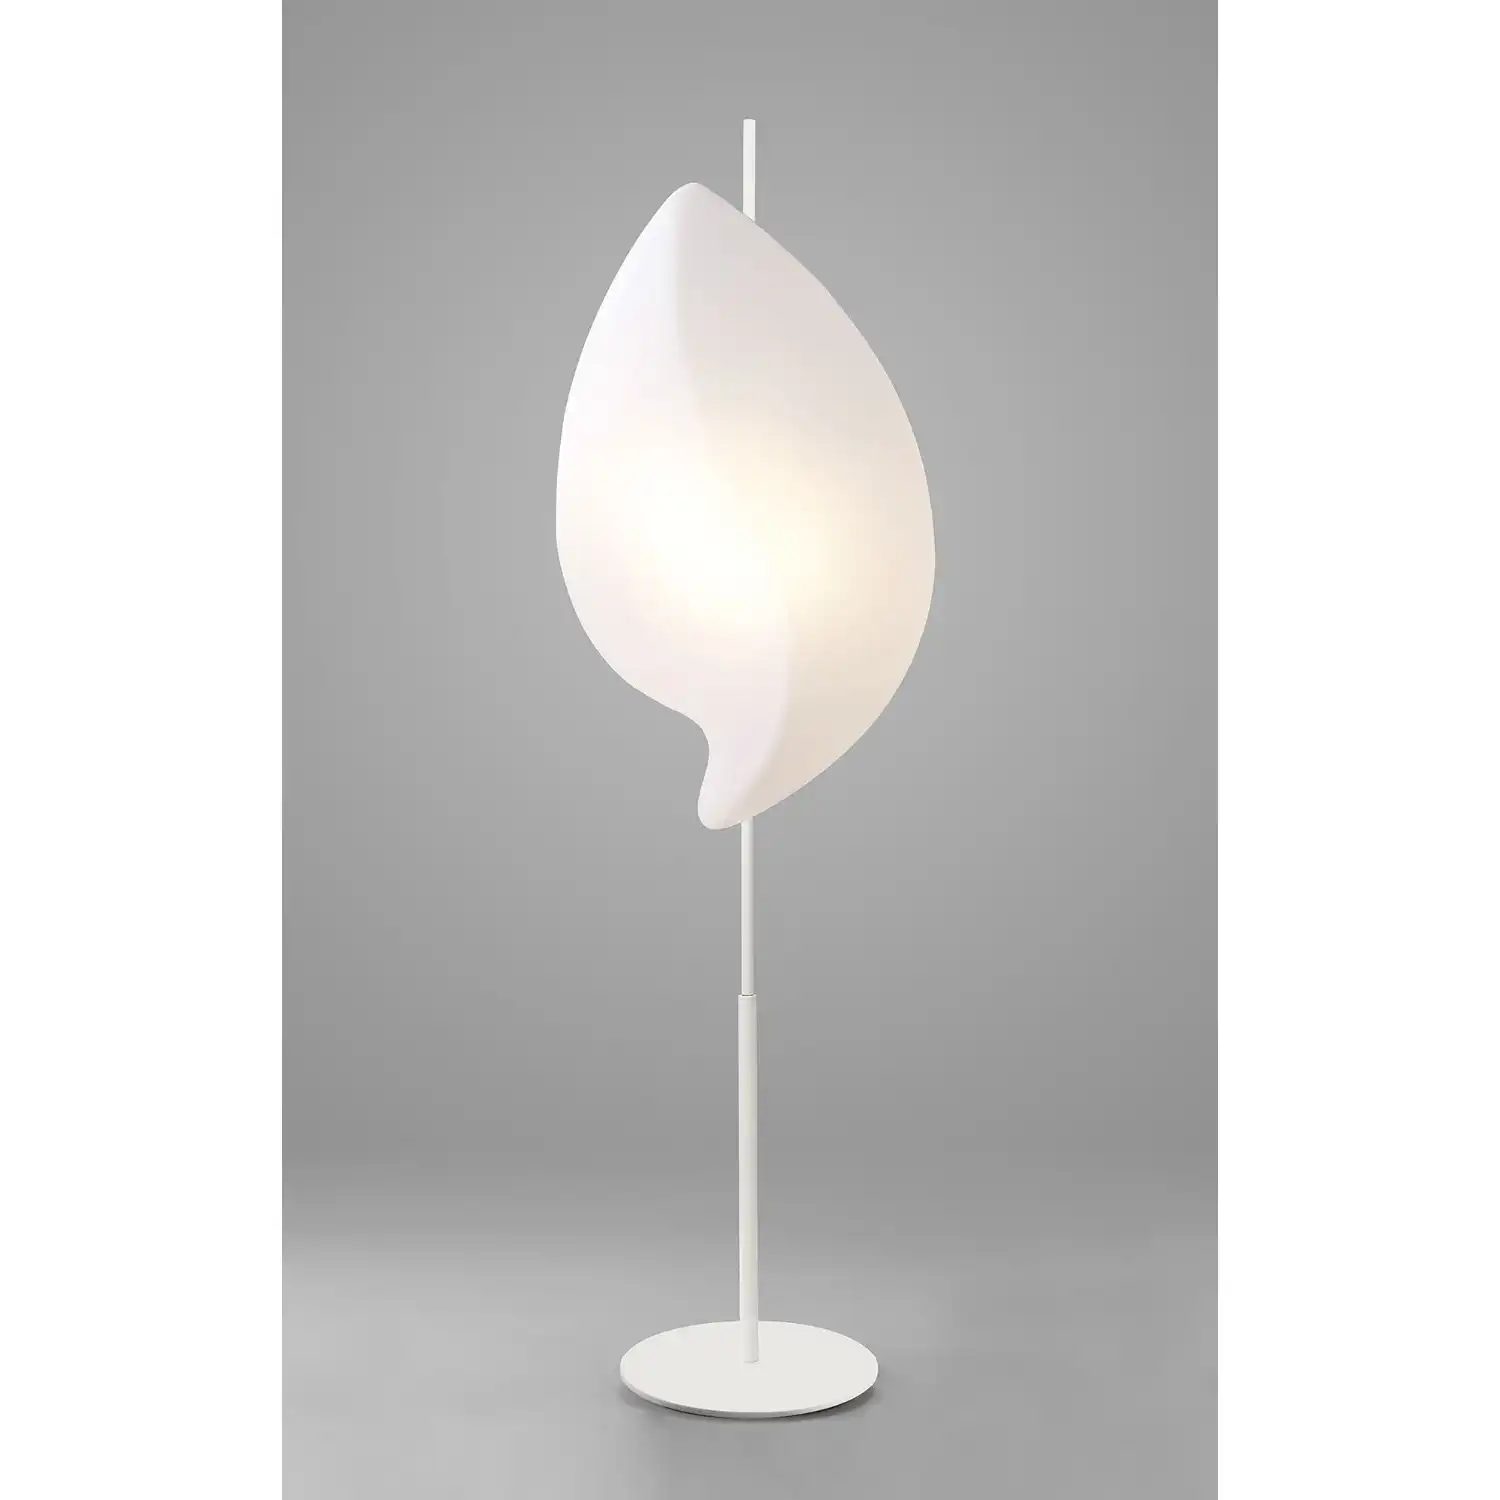 Natura Floor Lamp 2 Light E27 Outdoor IP44, Matt White Opal White Item Weight: 15kg